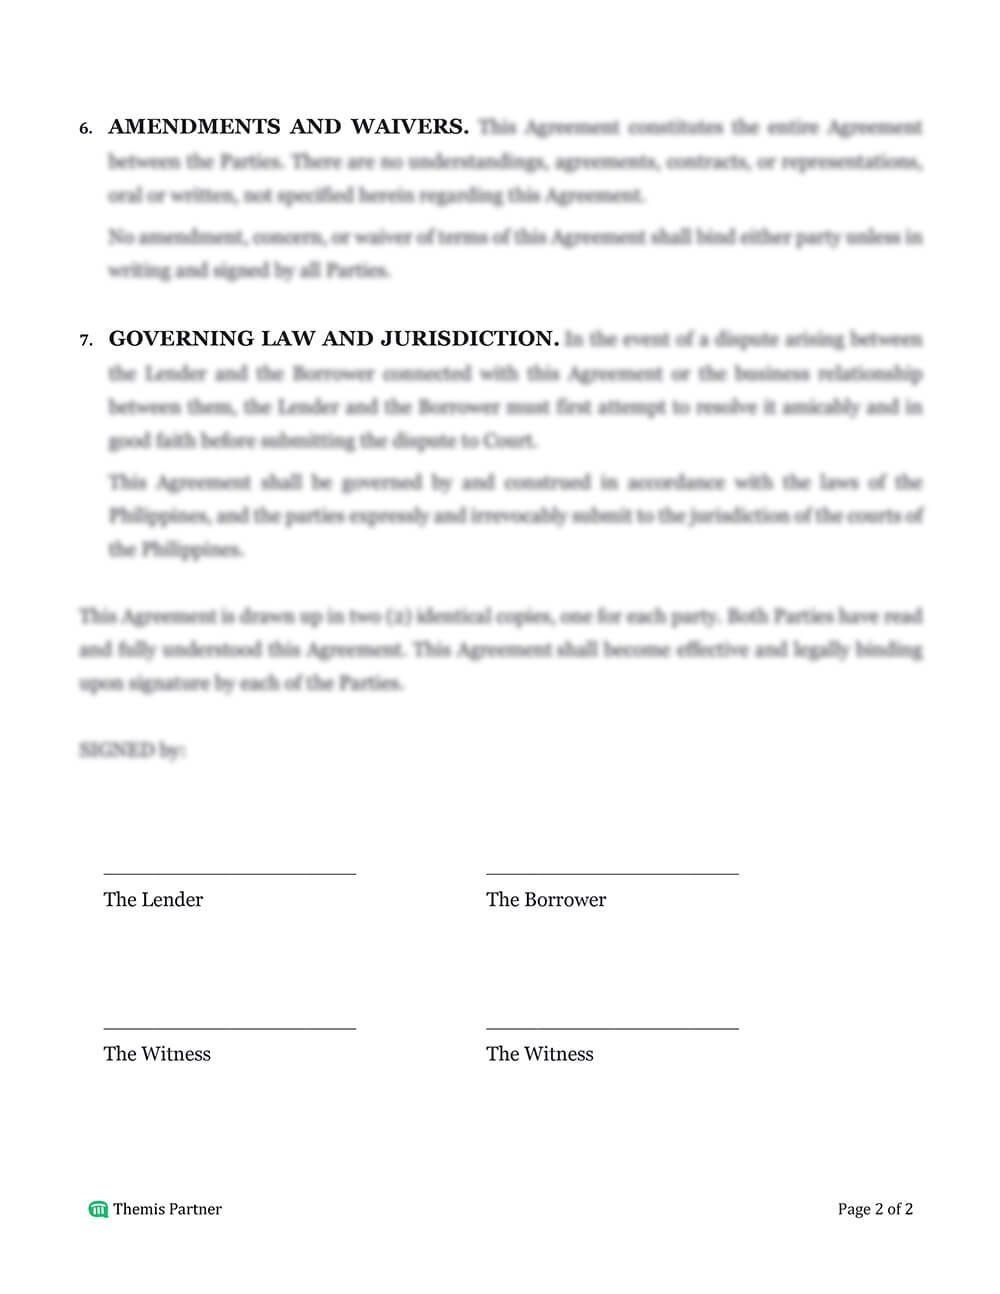 Loan agreement template 2